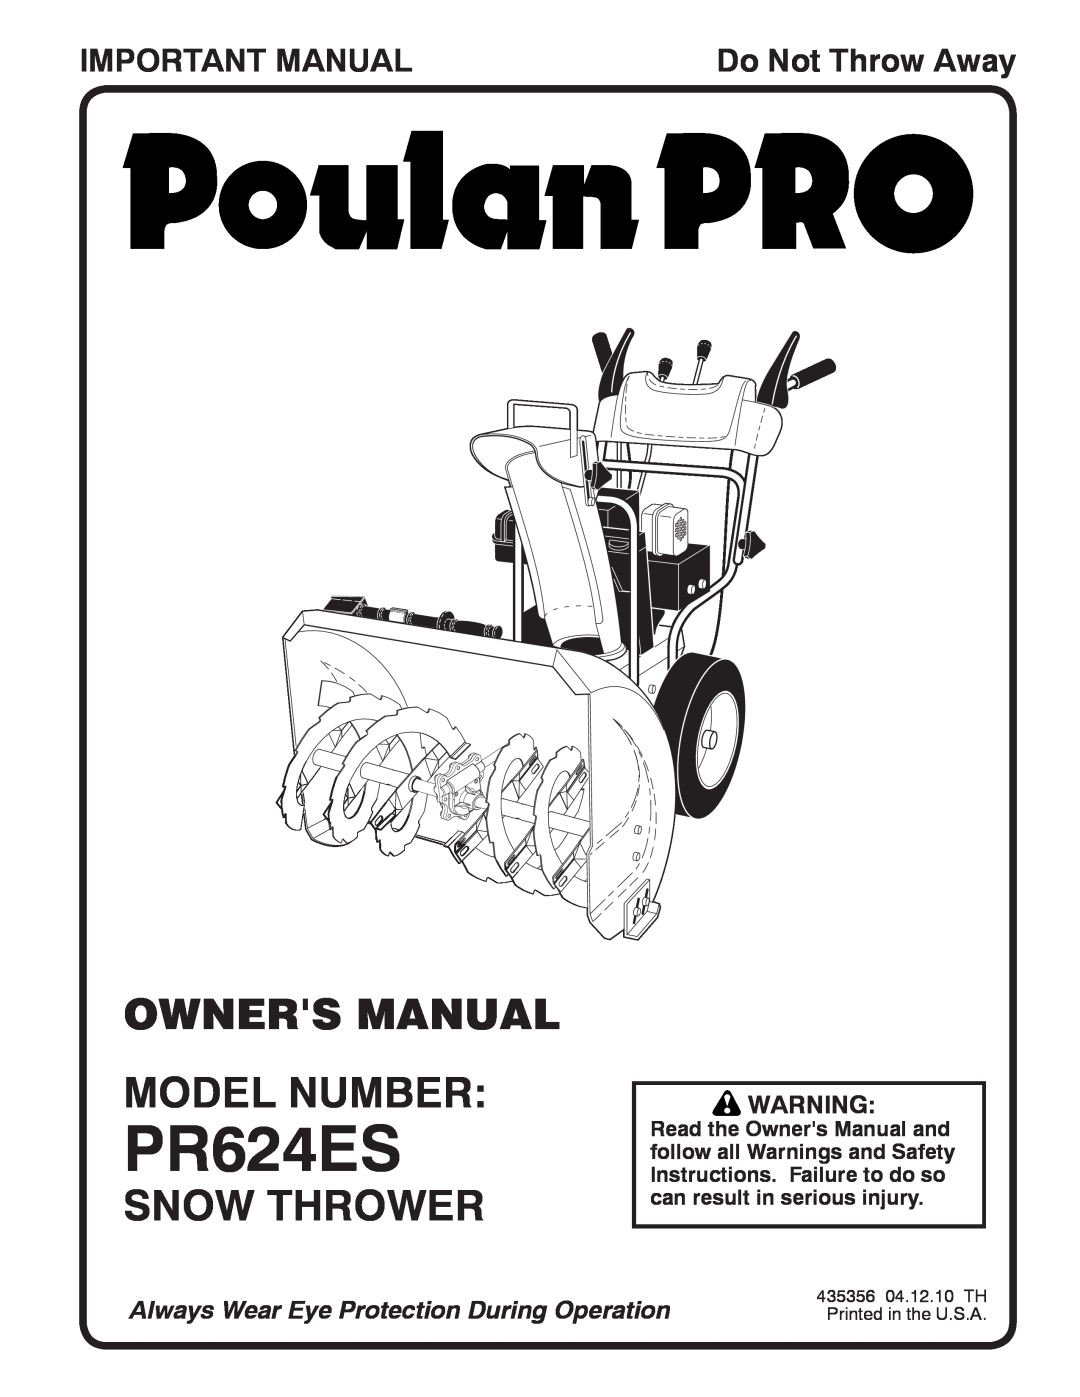 Poulan 96192003700, 435356 owner manual Snow Thrower, Important Manual, PR624ES, Do Not Throw Away 